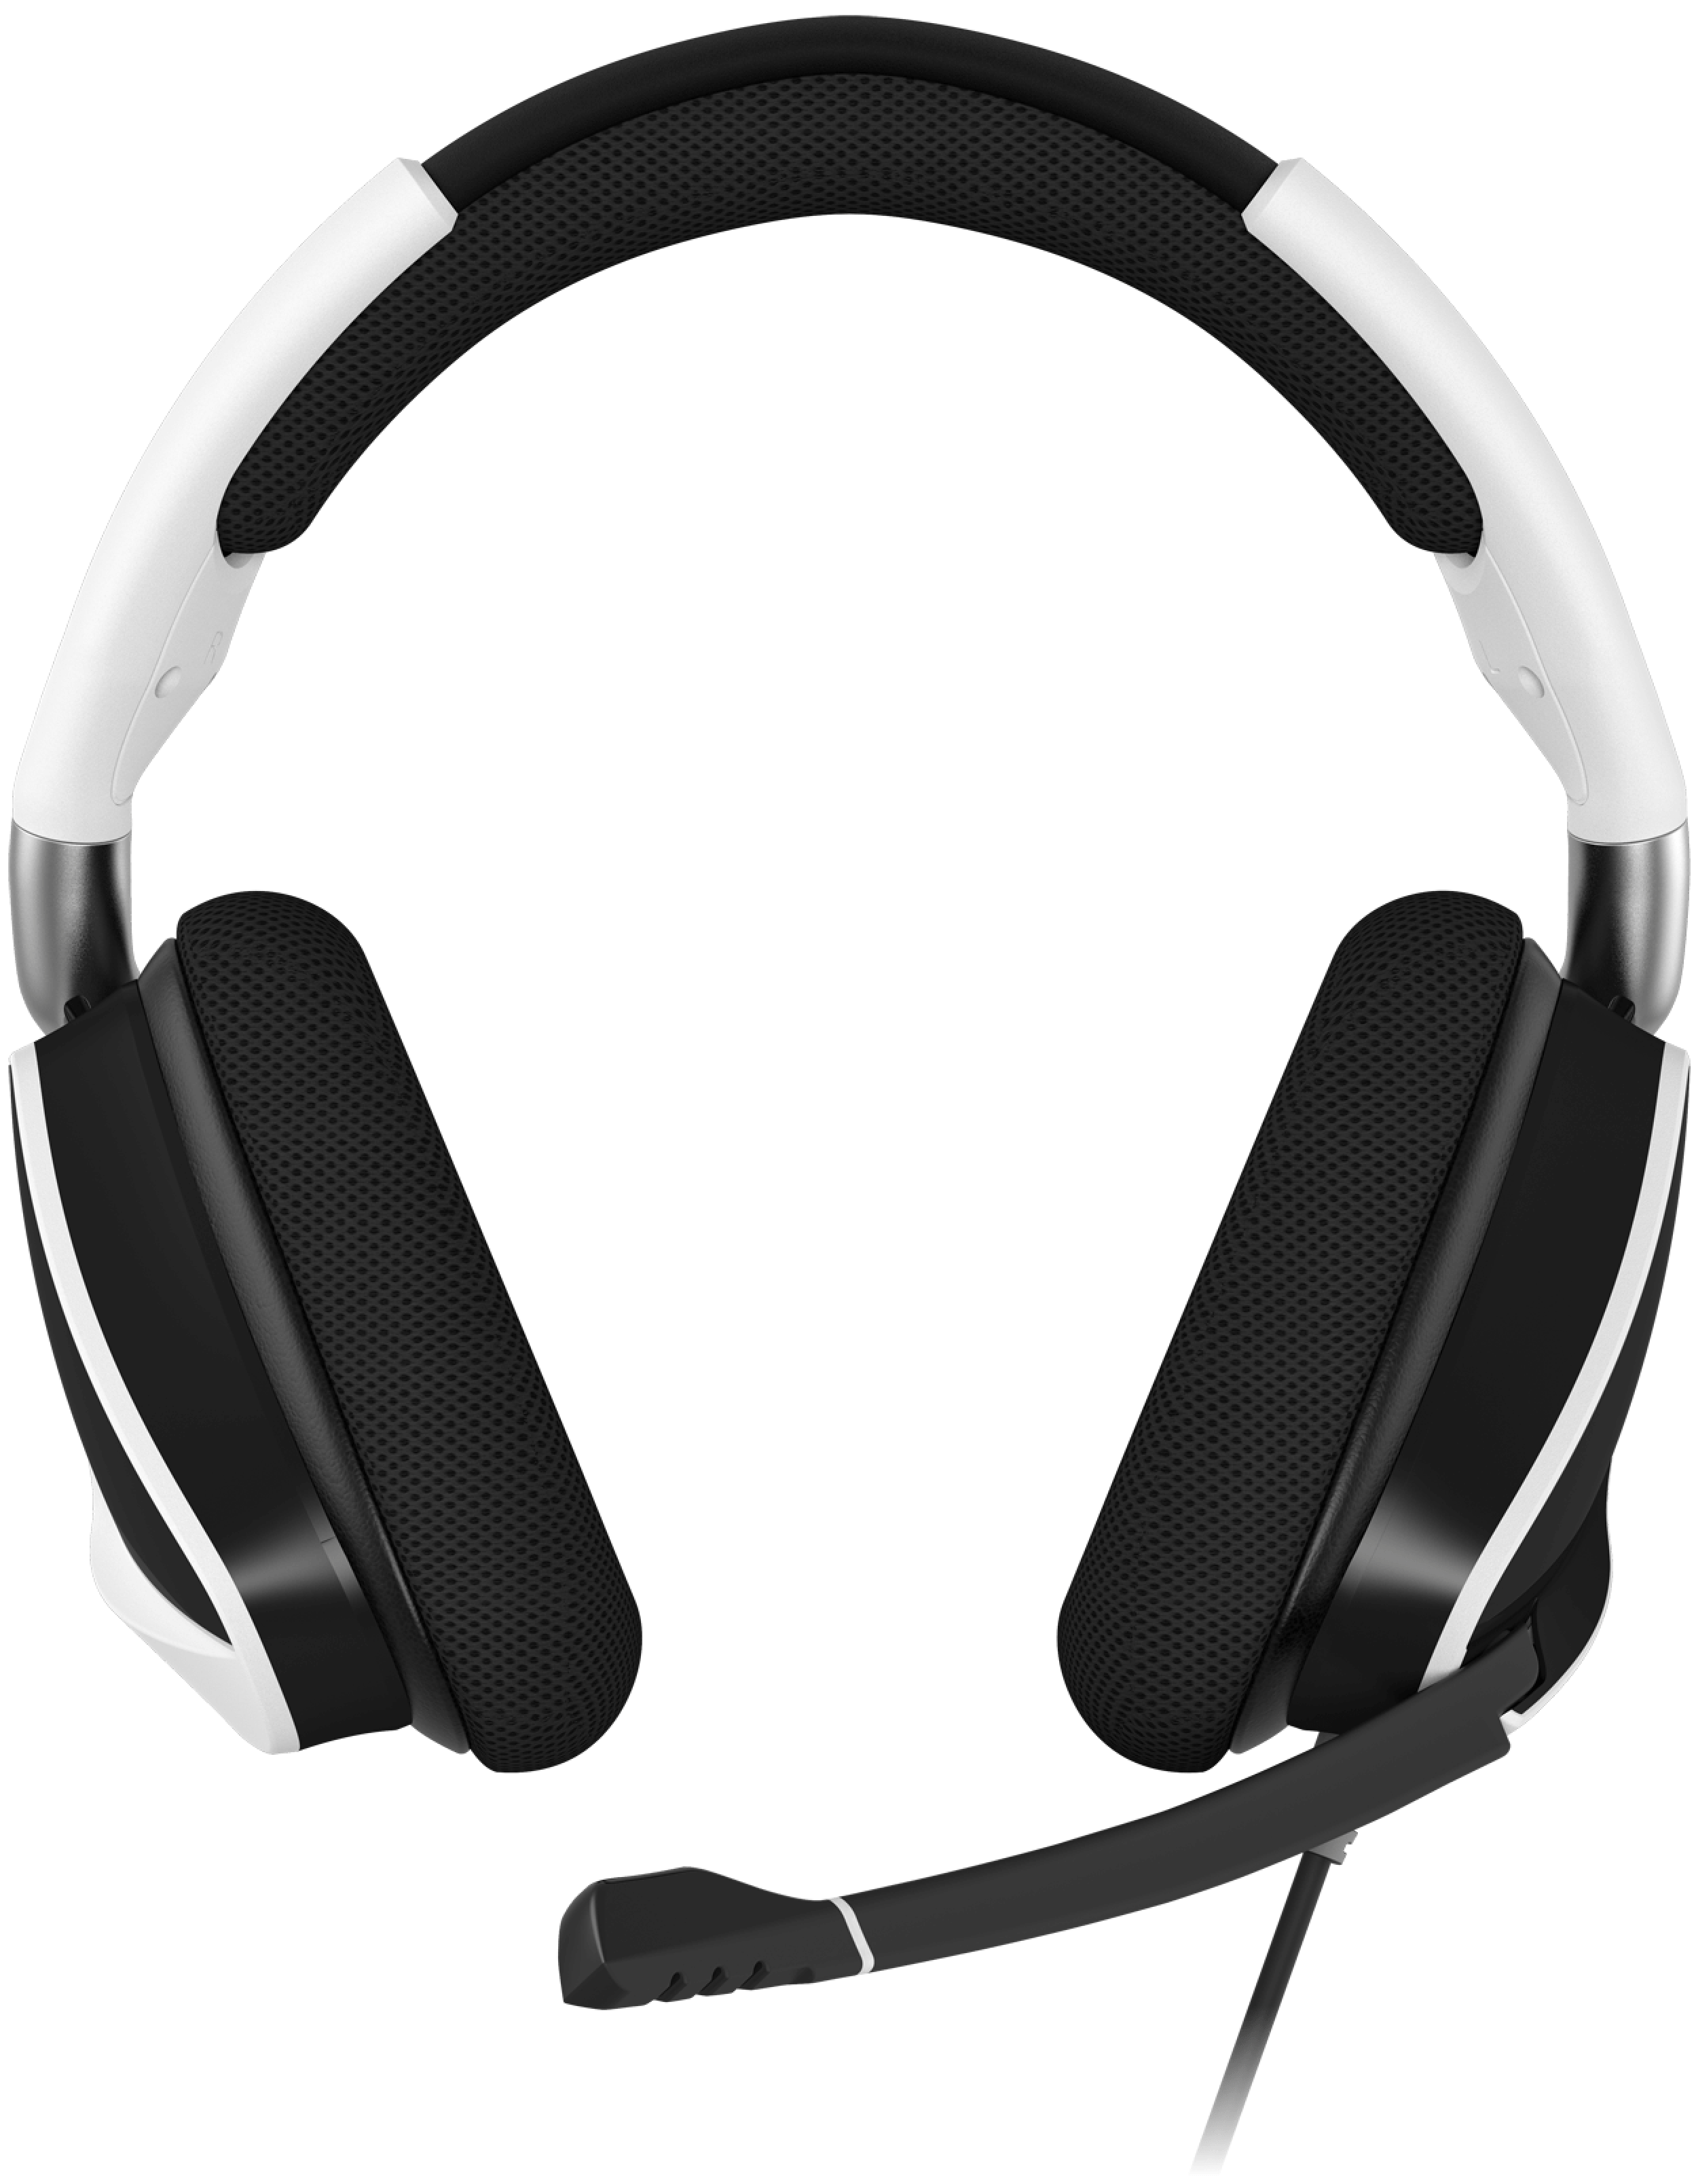 corsair headset ps4